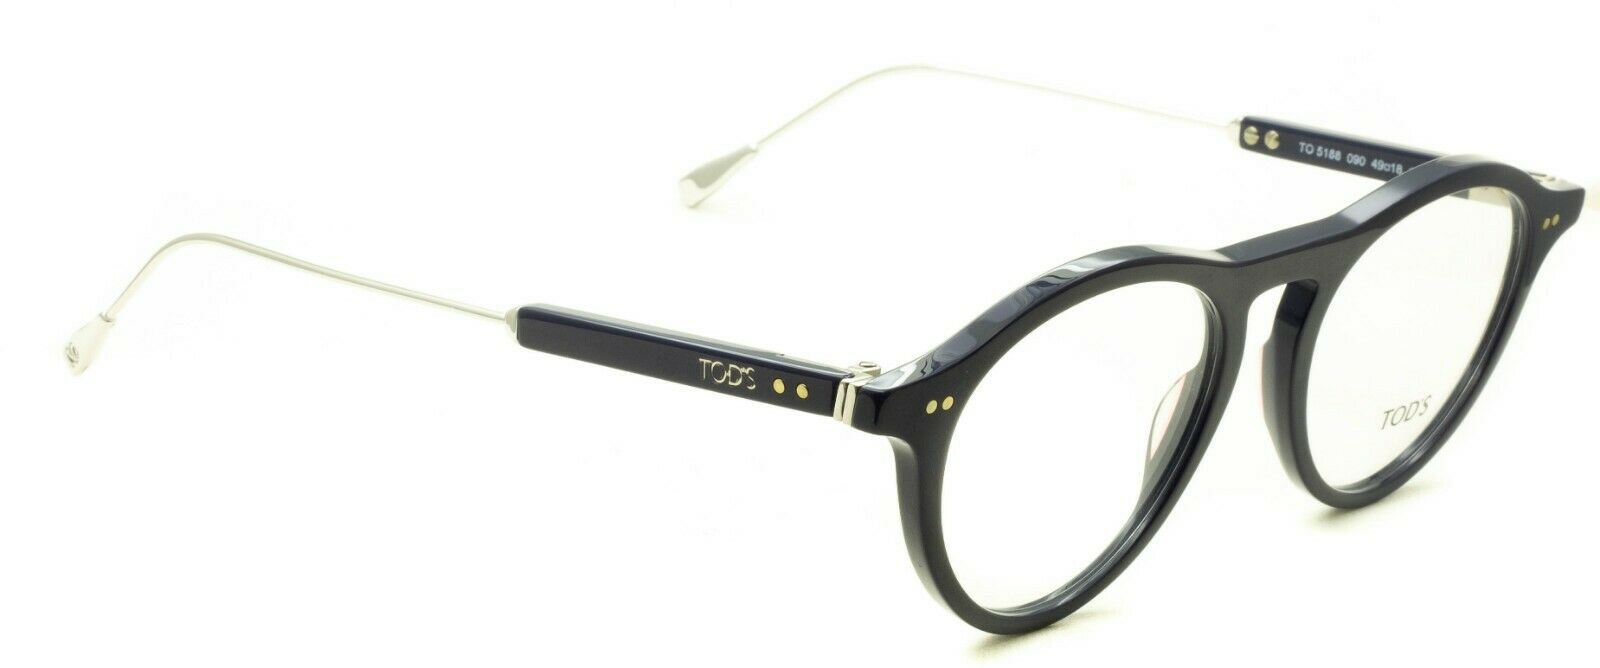 TOD'S TO 5188 090 49mm Eyewear FRAMES Glasses RX Optical Eyeglasses New - Italy